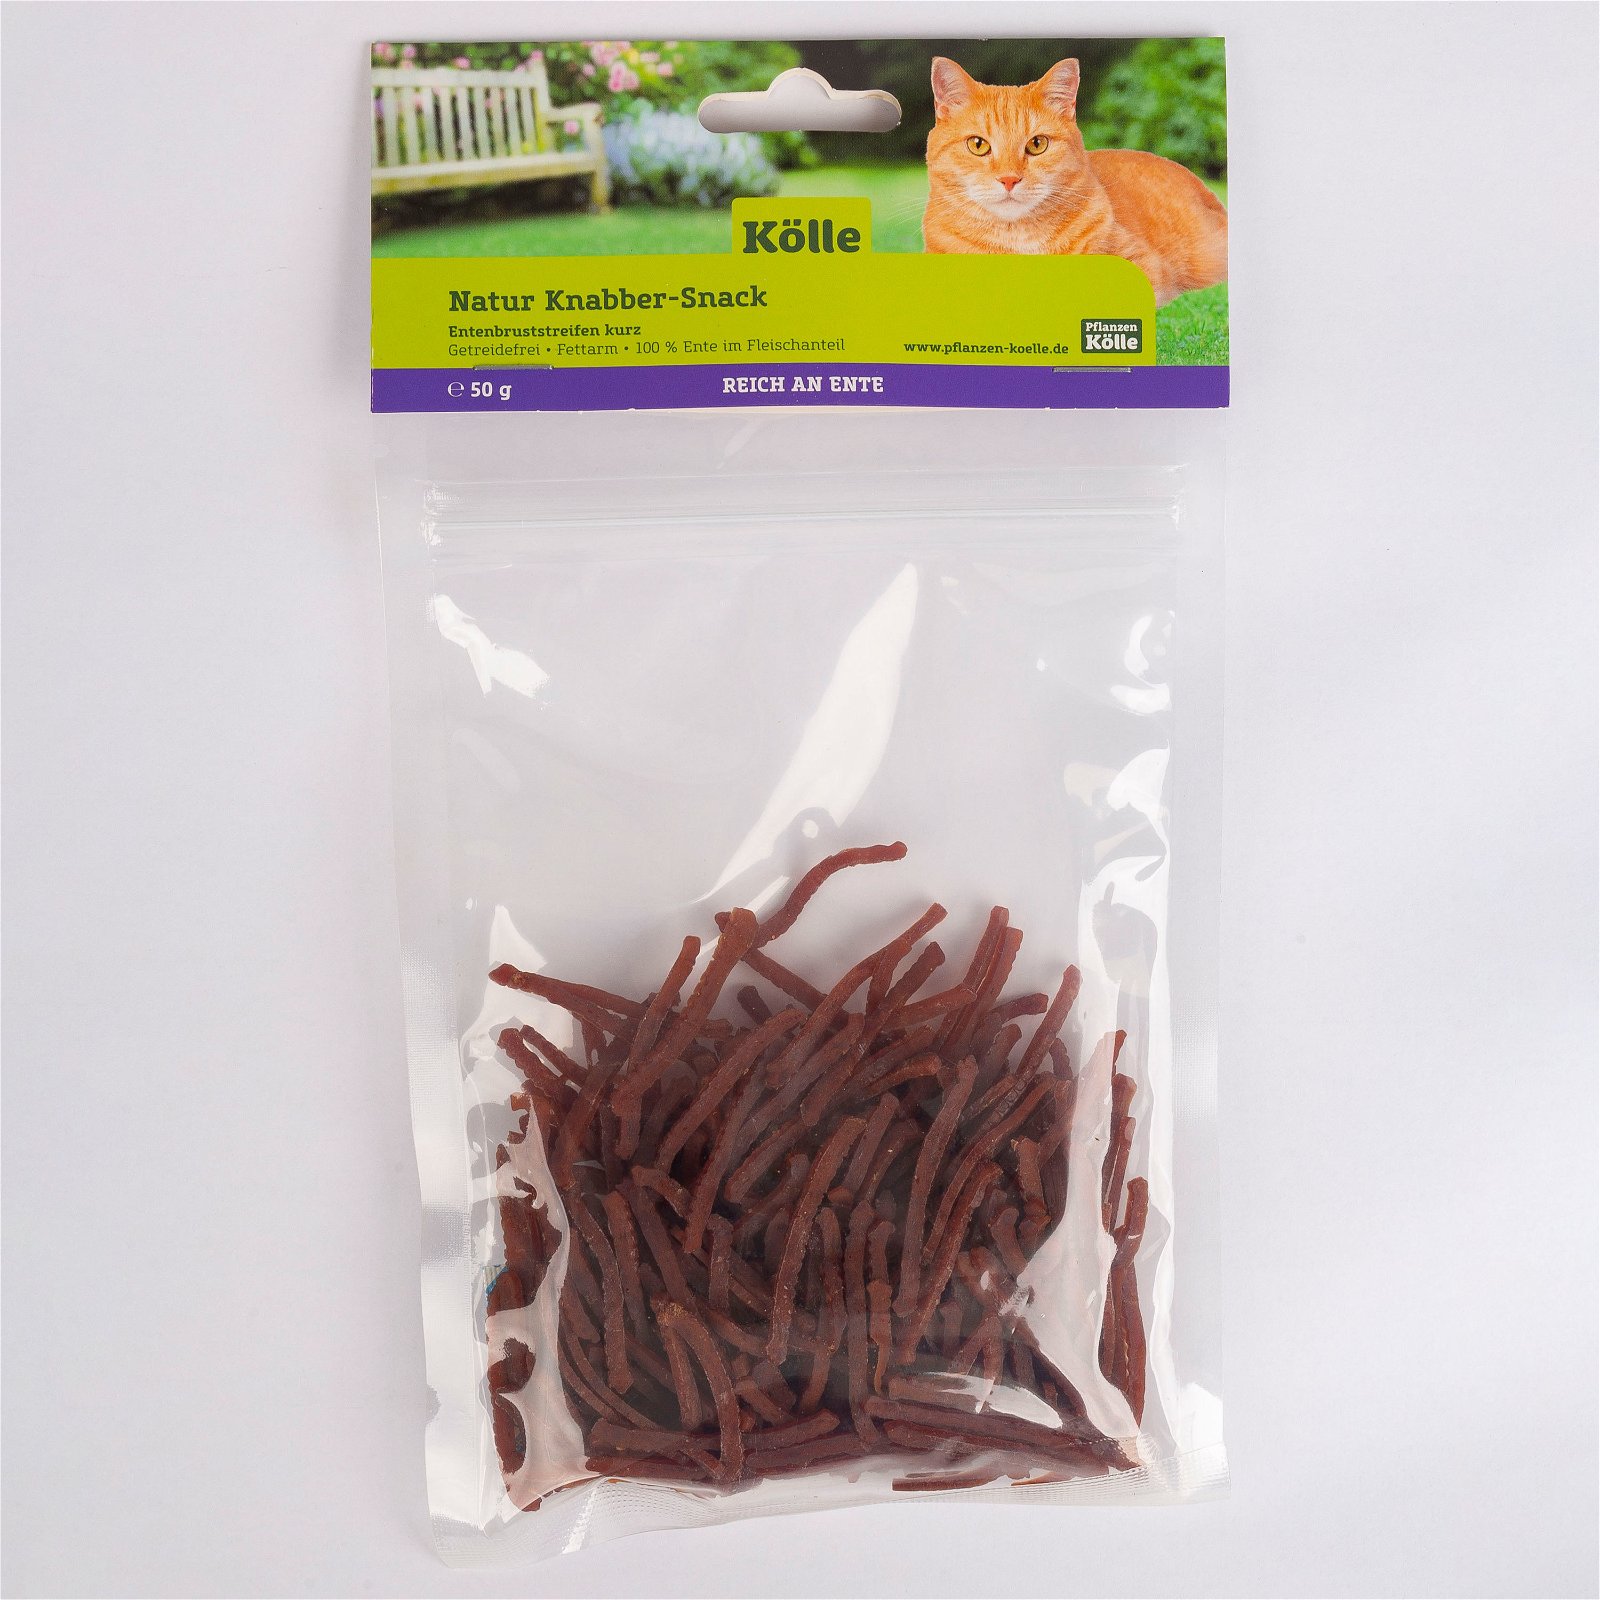 Natur Knabber-Snack für Katzen, Entenbruststreifen kurz, 50 g